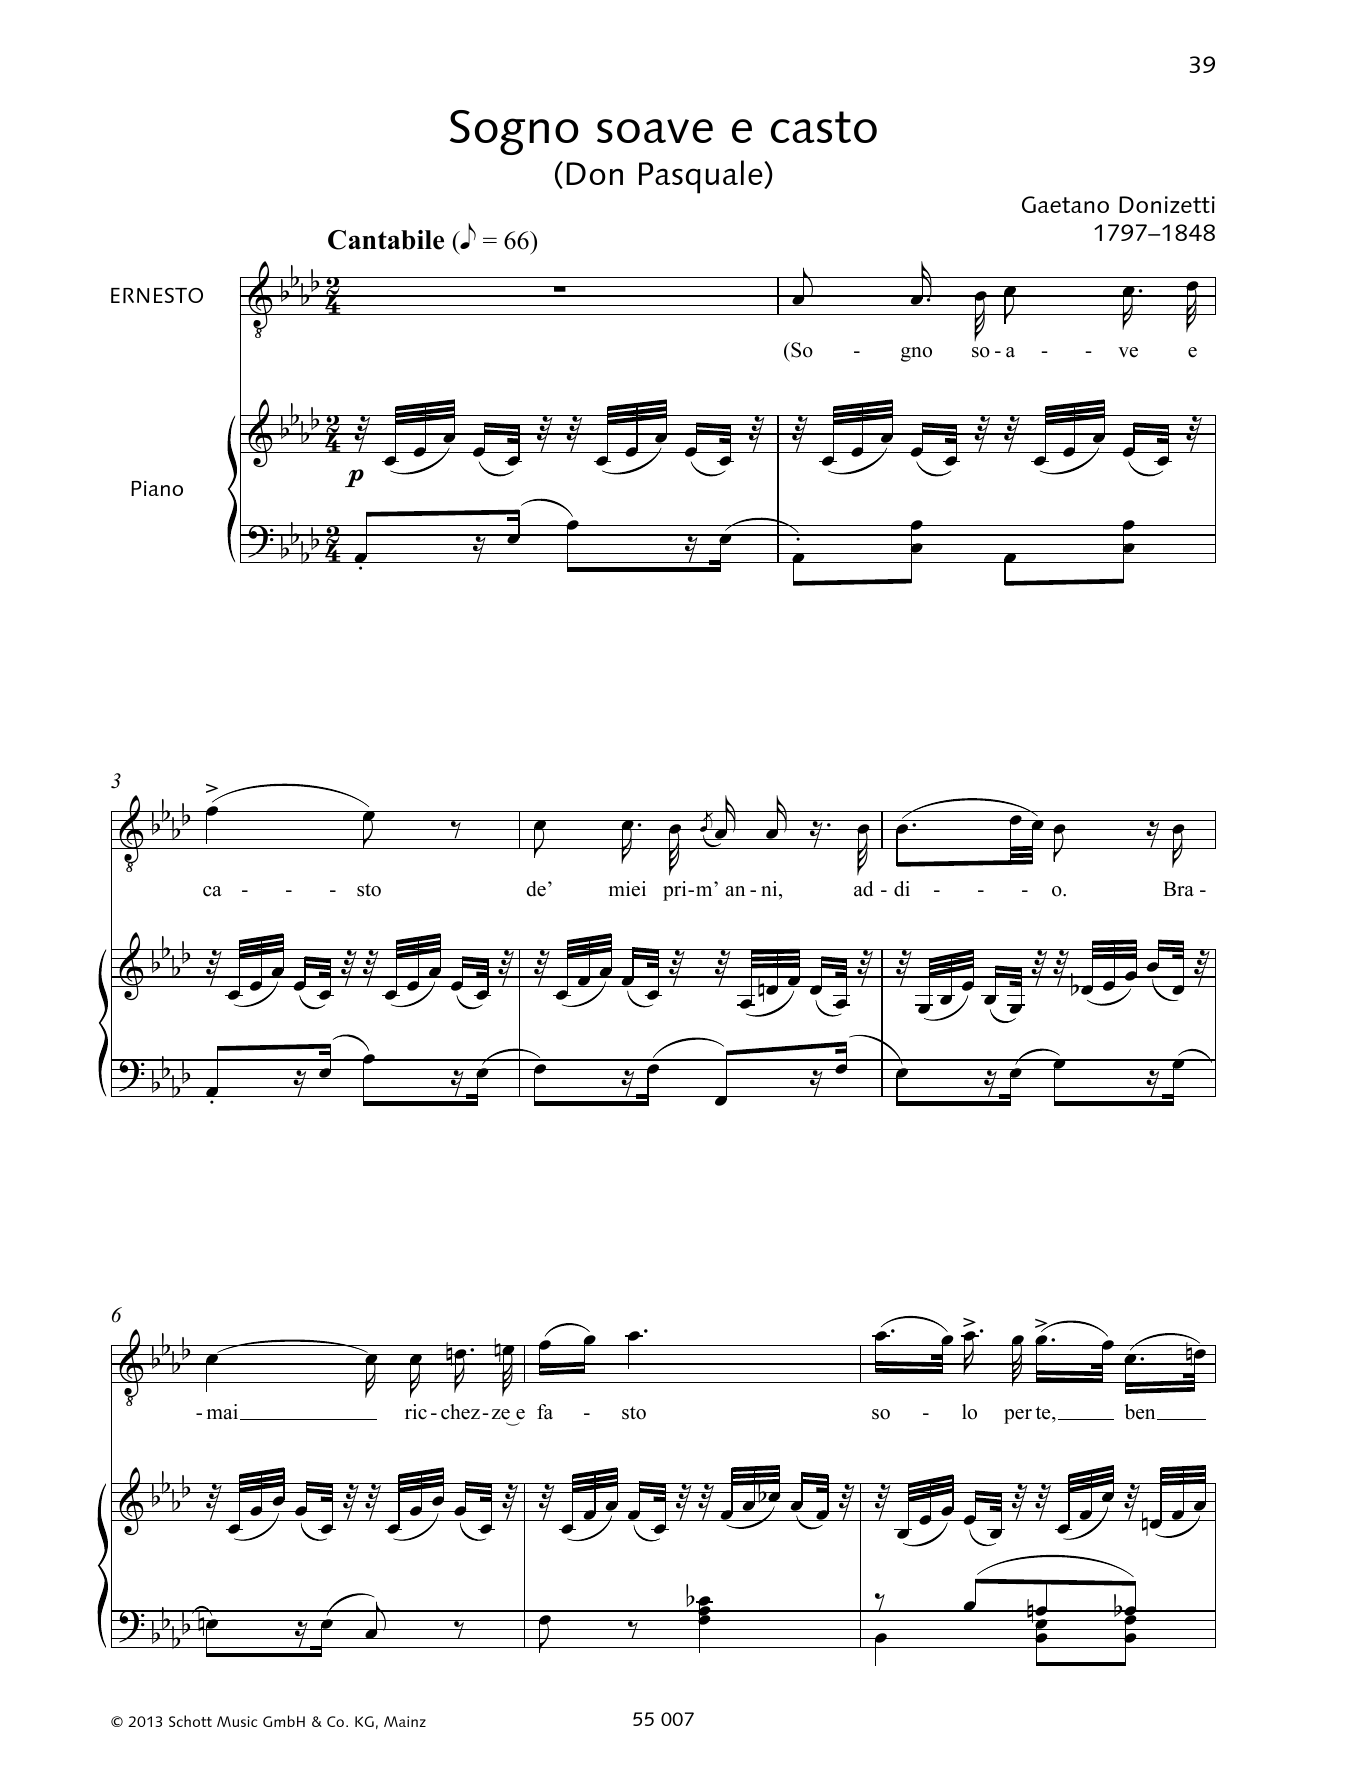 Francesca Licciarda Sogno soave e casto Sheet Music Notes & Chords for Piano & Vocal - Download or Print PDF